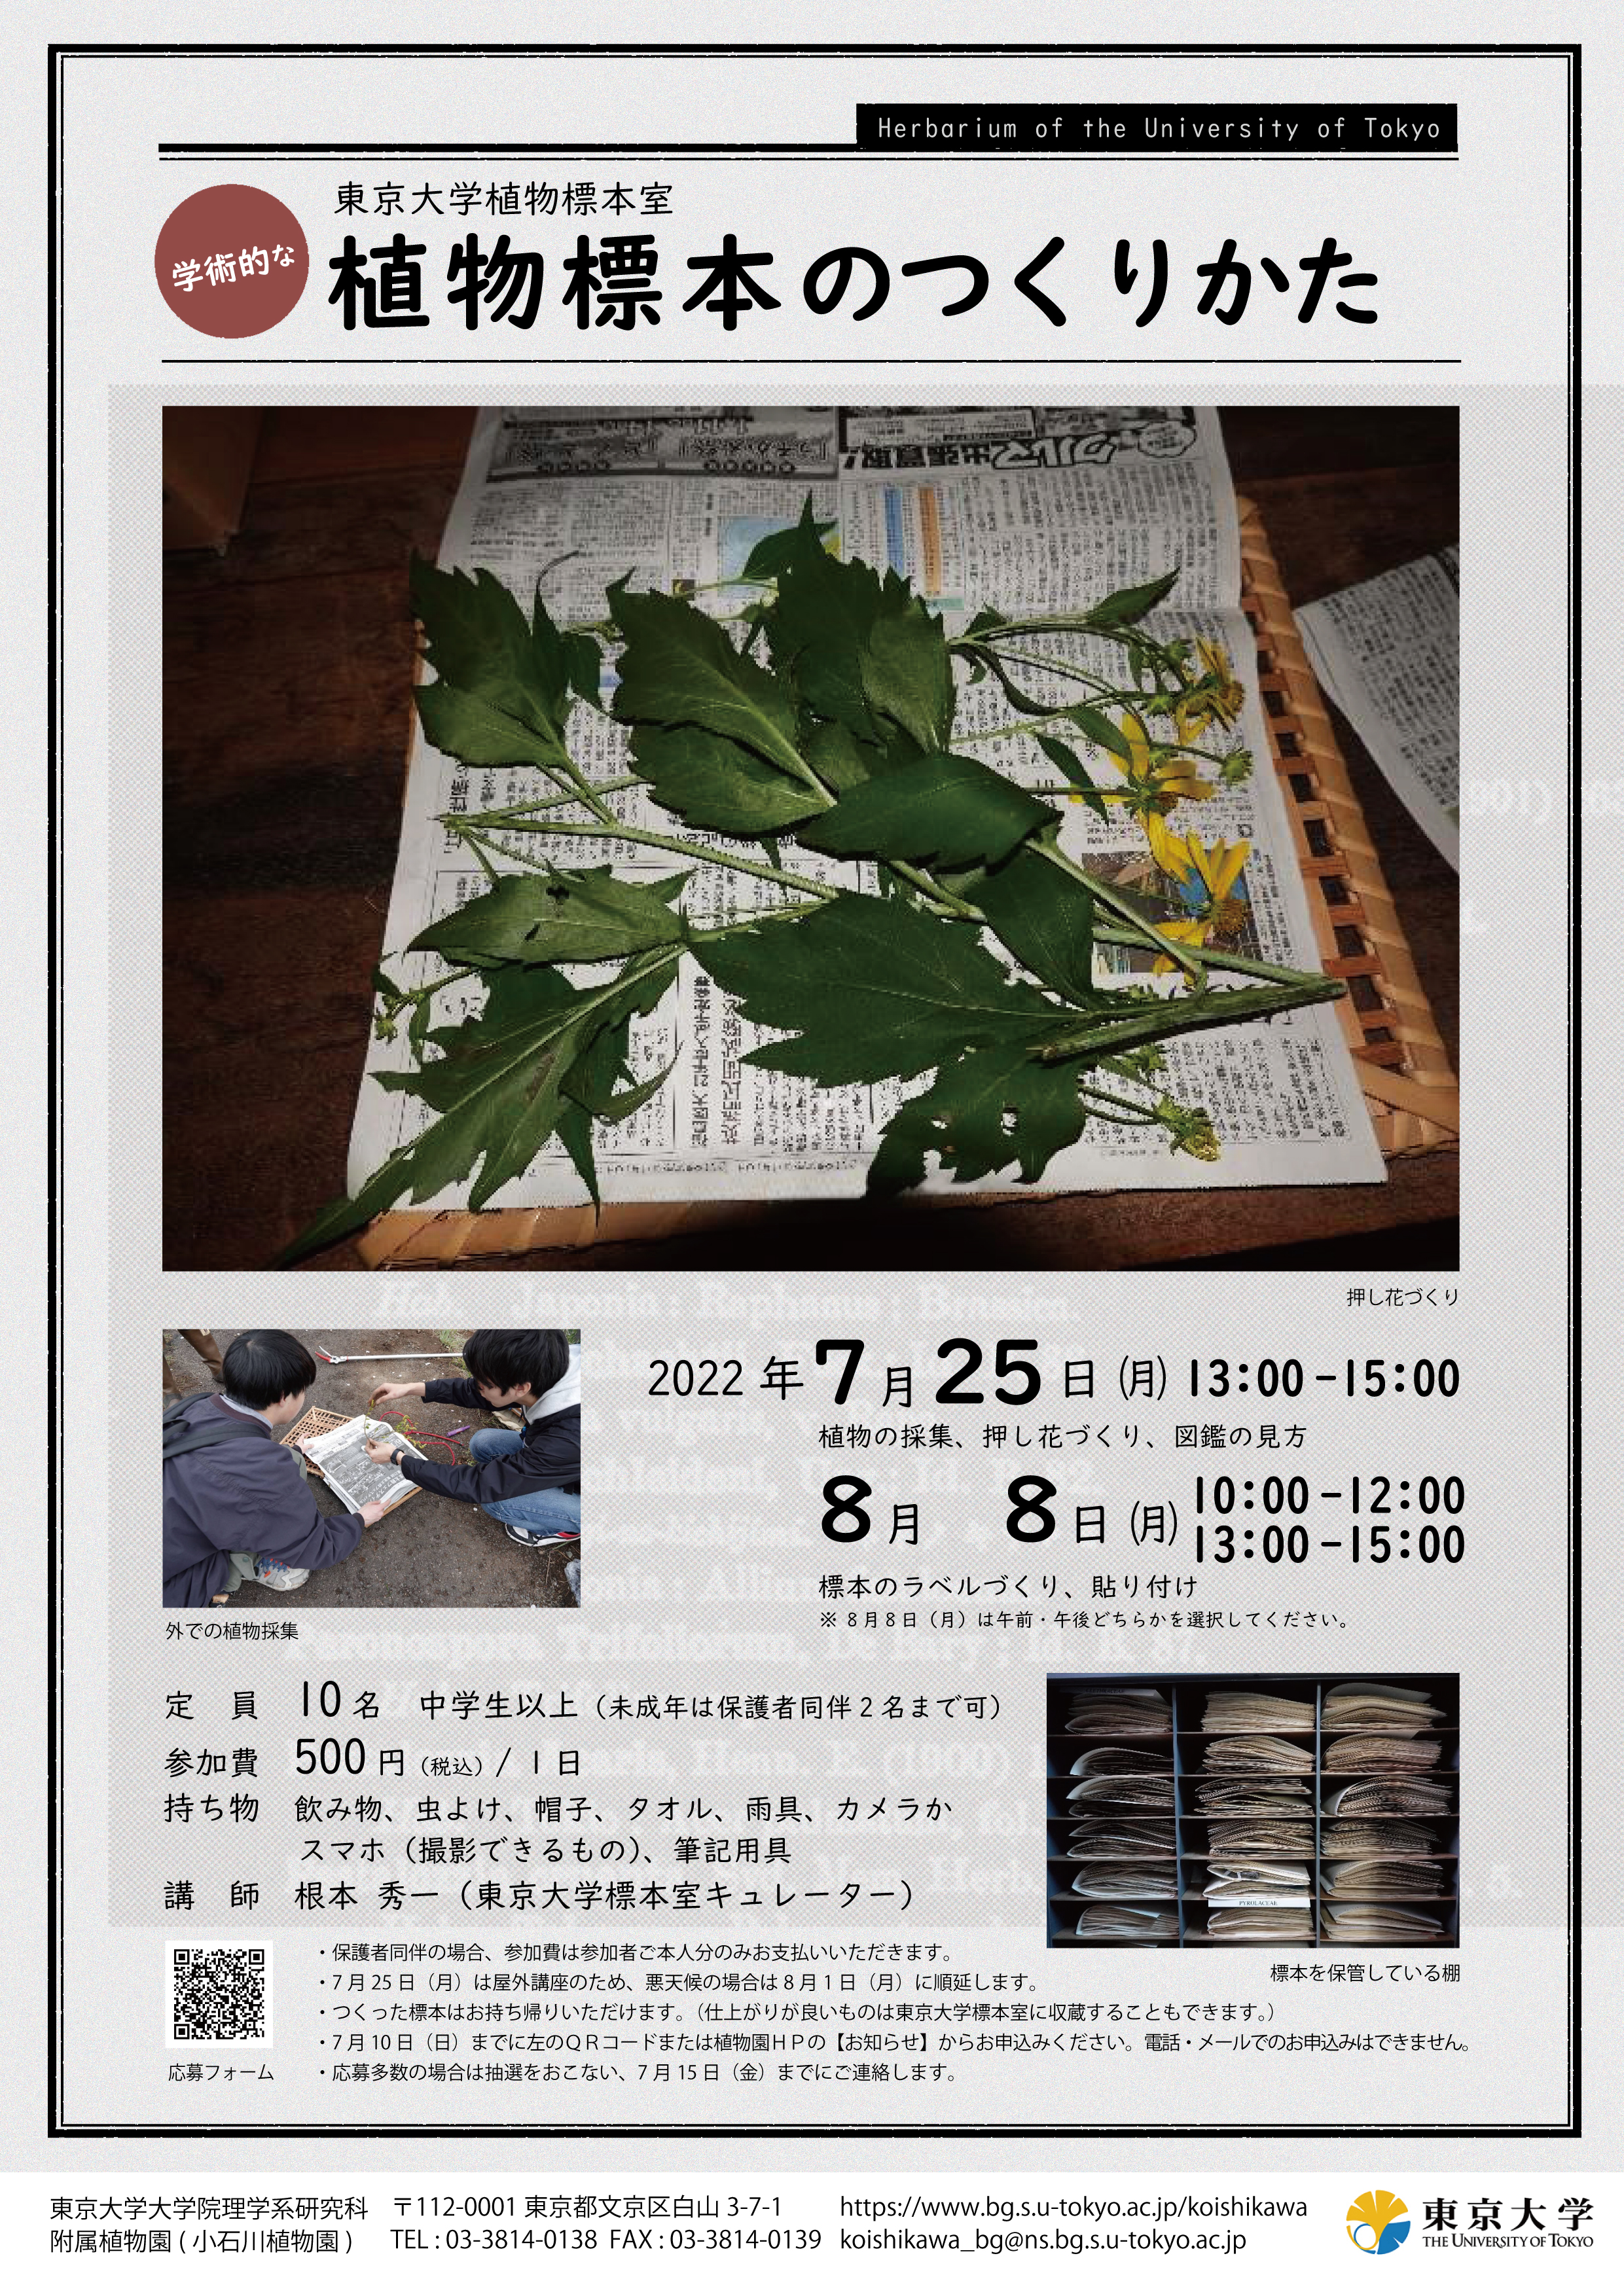 2022 Summer Event, The University of Tokyo Herbarium 